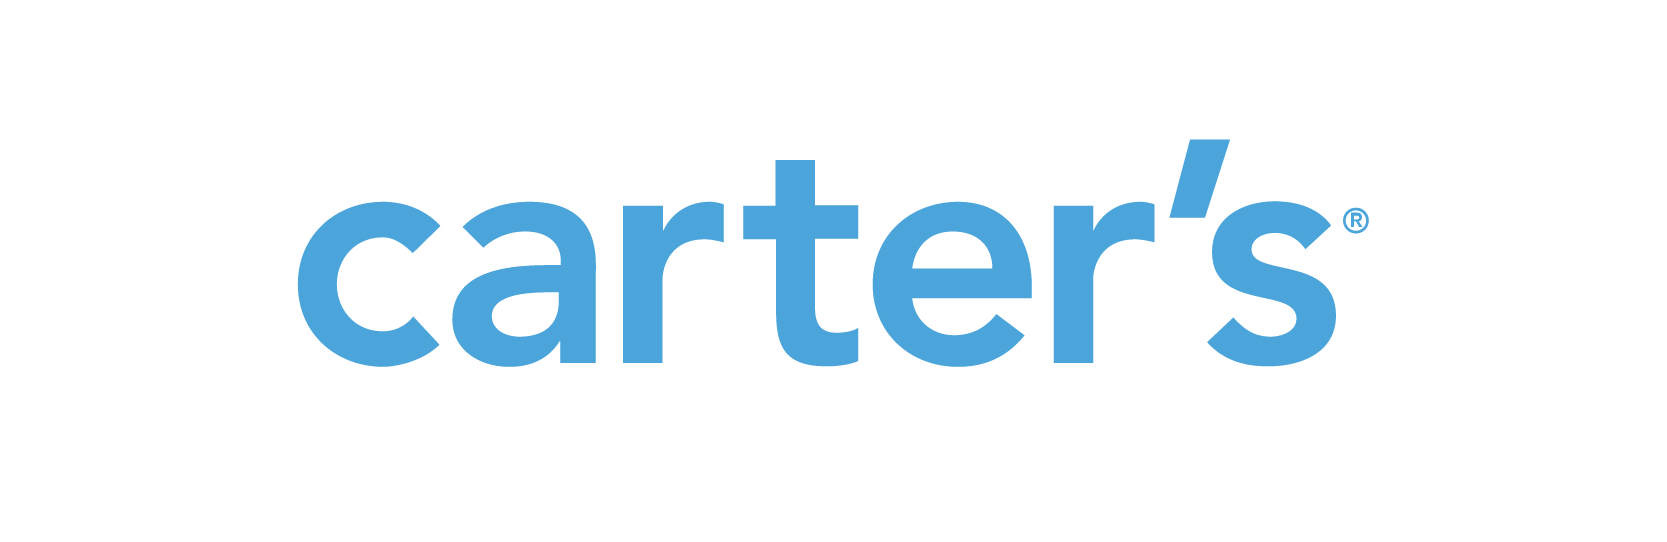 Graphic: Carter's logo